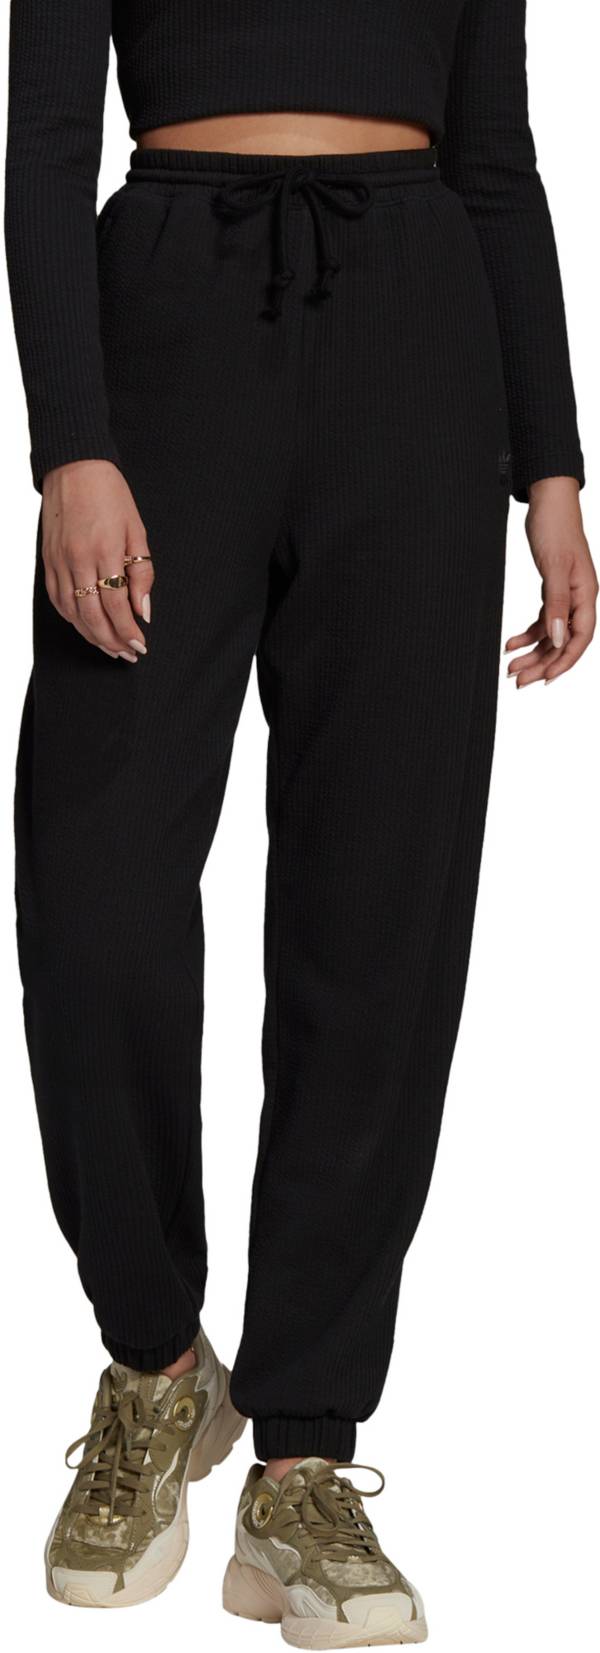 adidas Originals Women's Rib Cuffed Pants product image